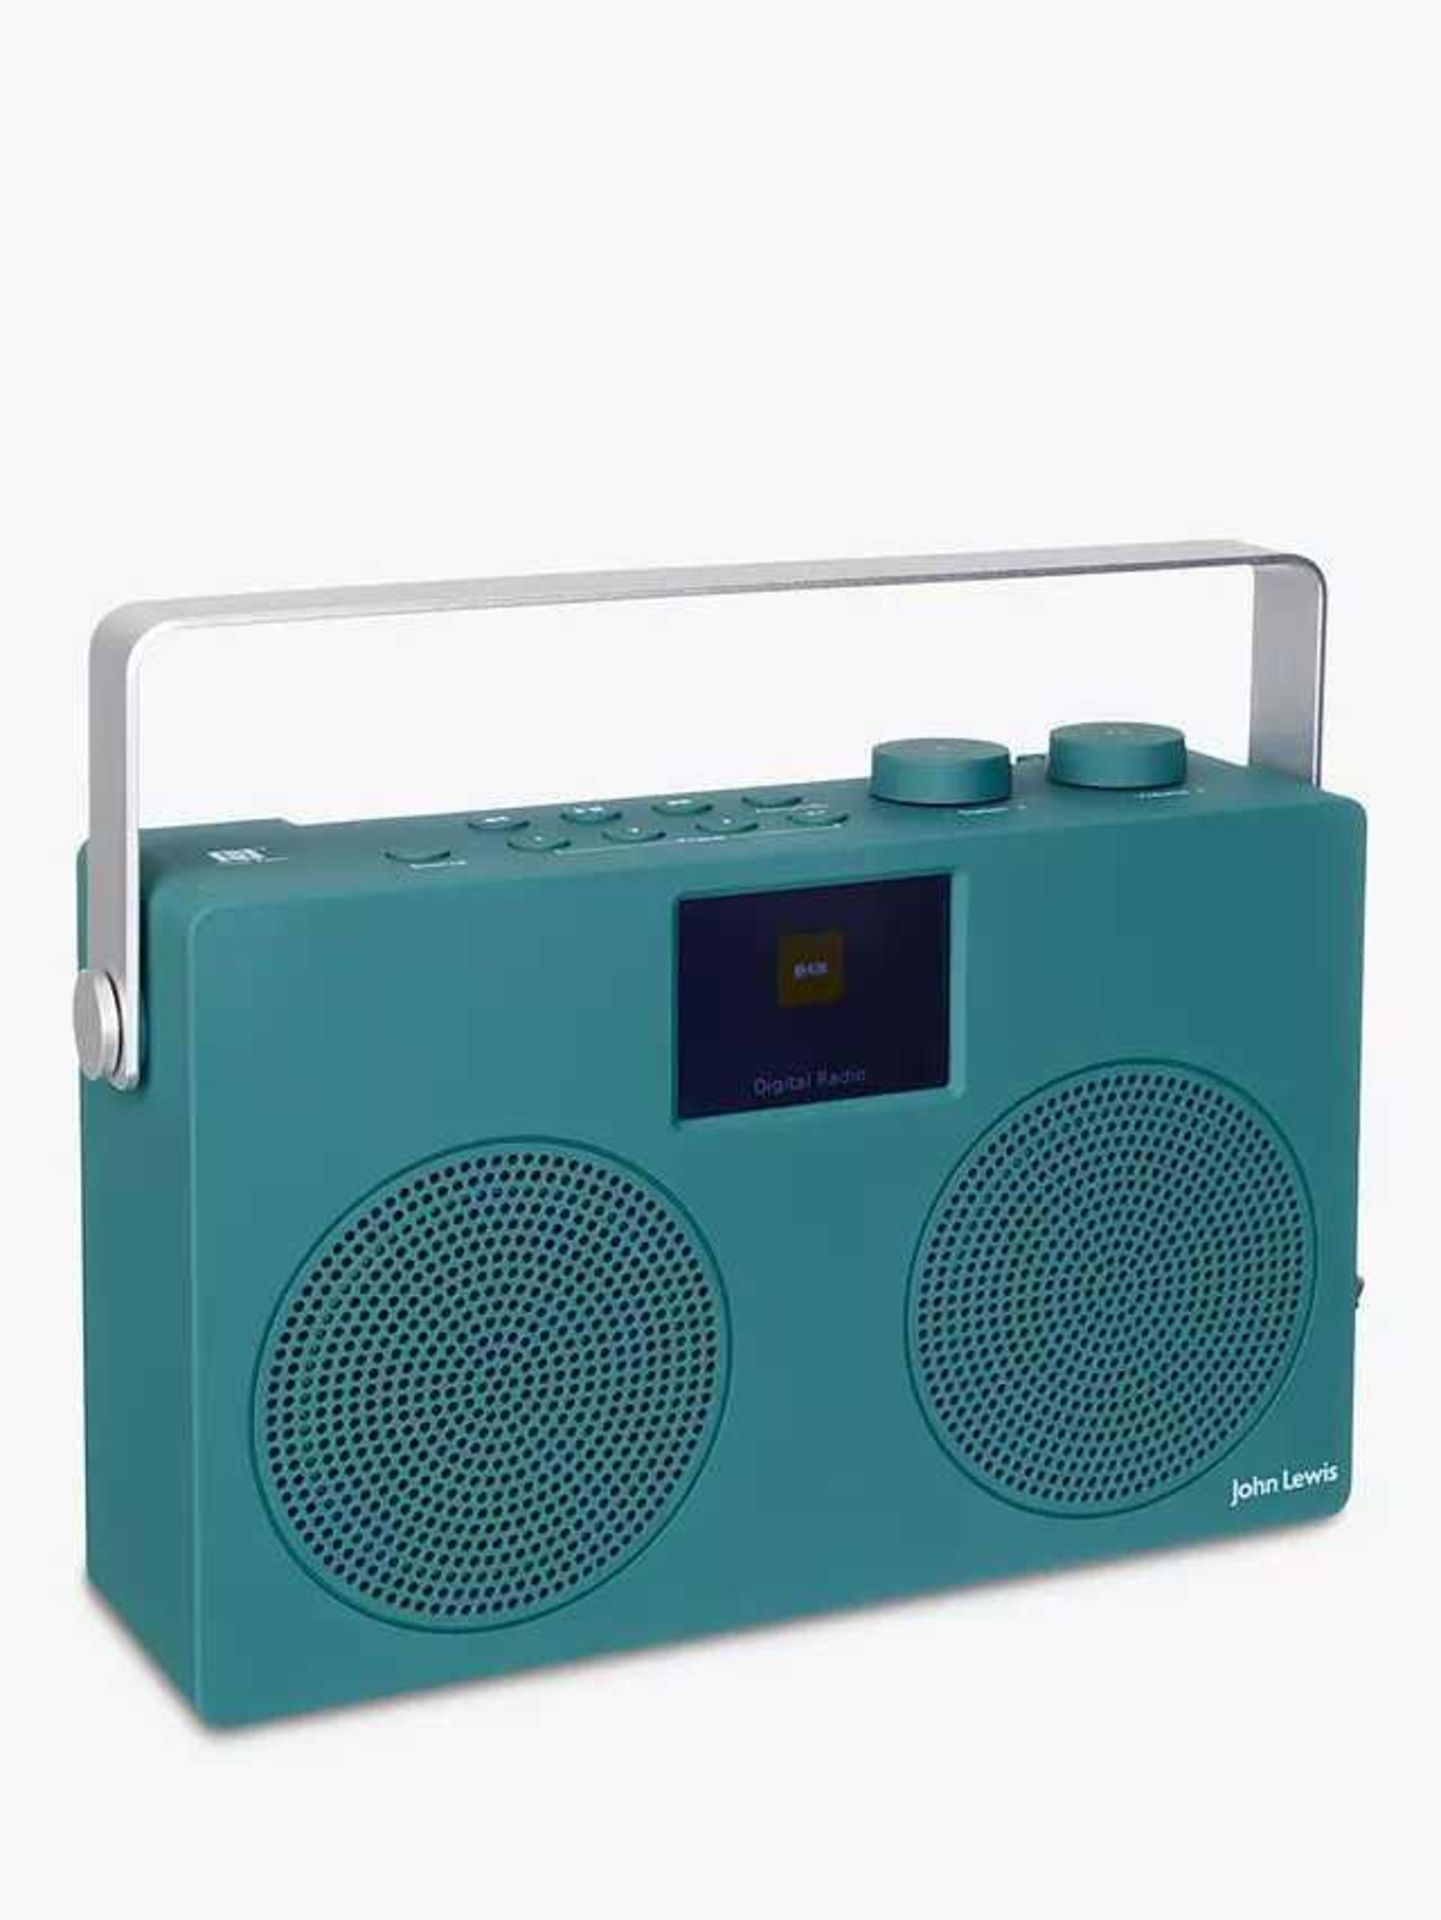 Rrp £70 Each Boxed John Lewis Spectrum Duo Dab And Fm Digital Radios - Image 3 of 4